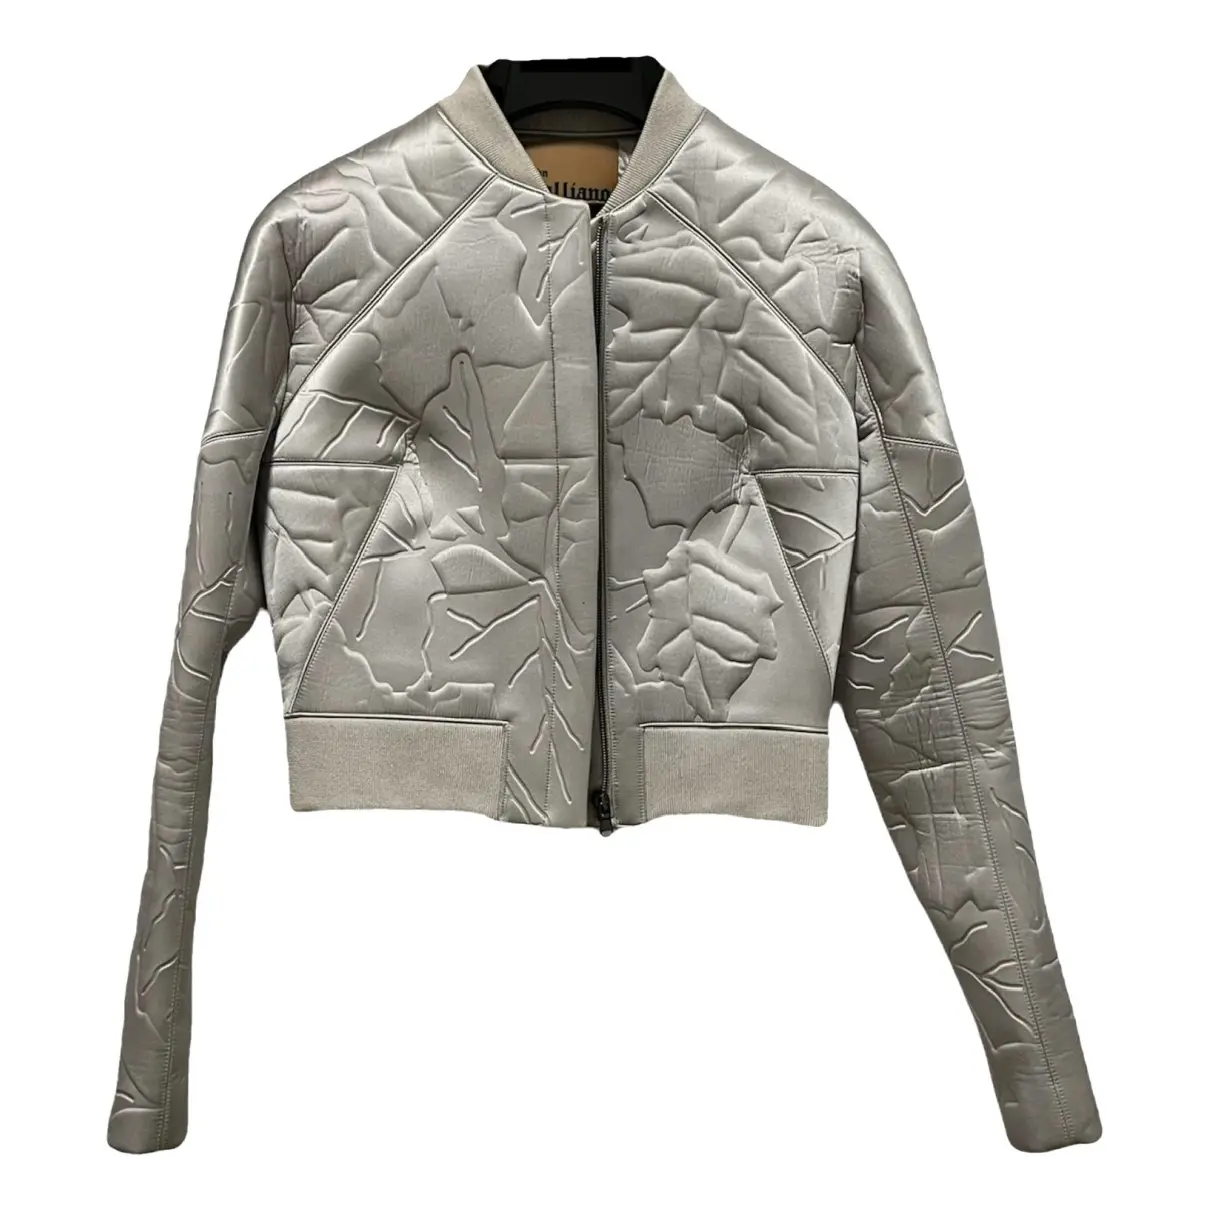 Jacket John Galliano - Vintage